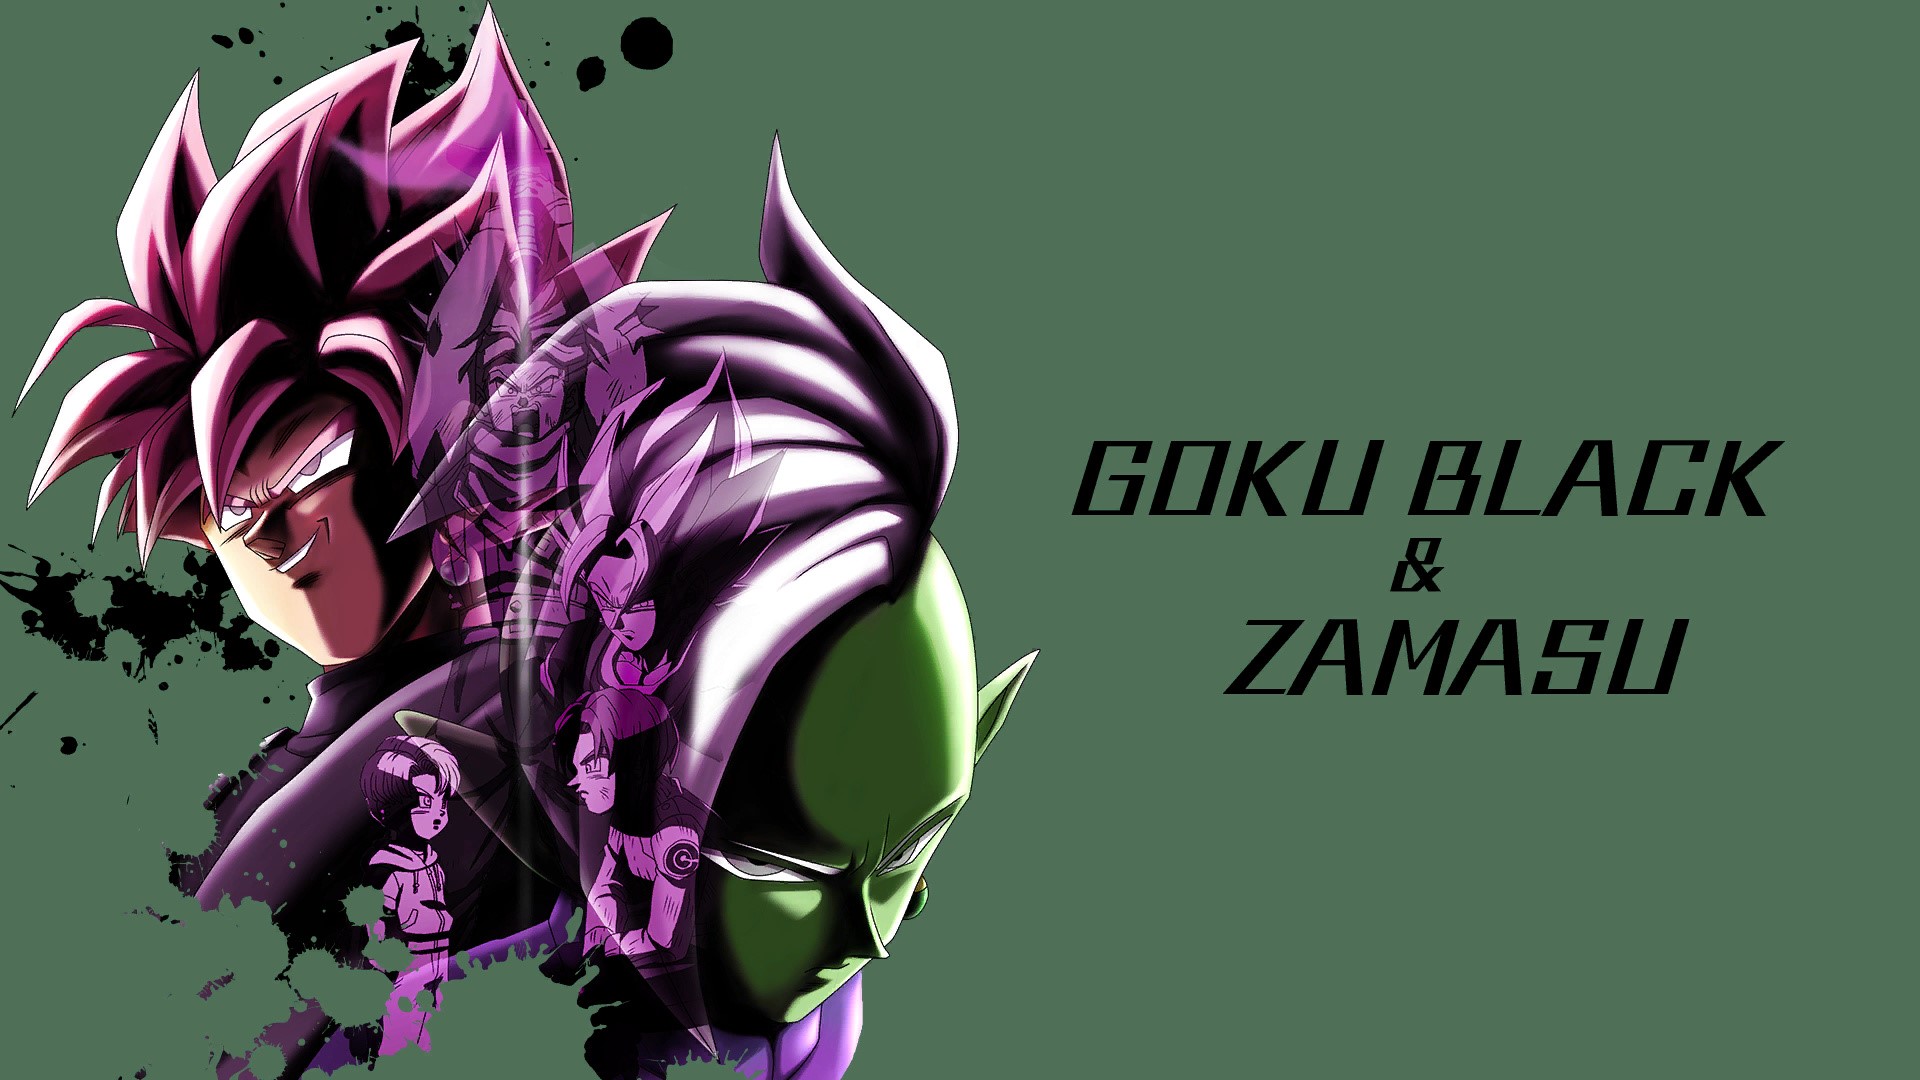 Goku Black And Zamasu Background Image and Wallpaper